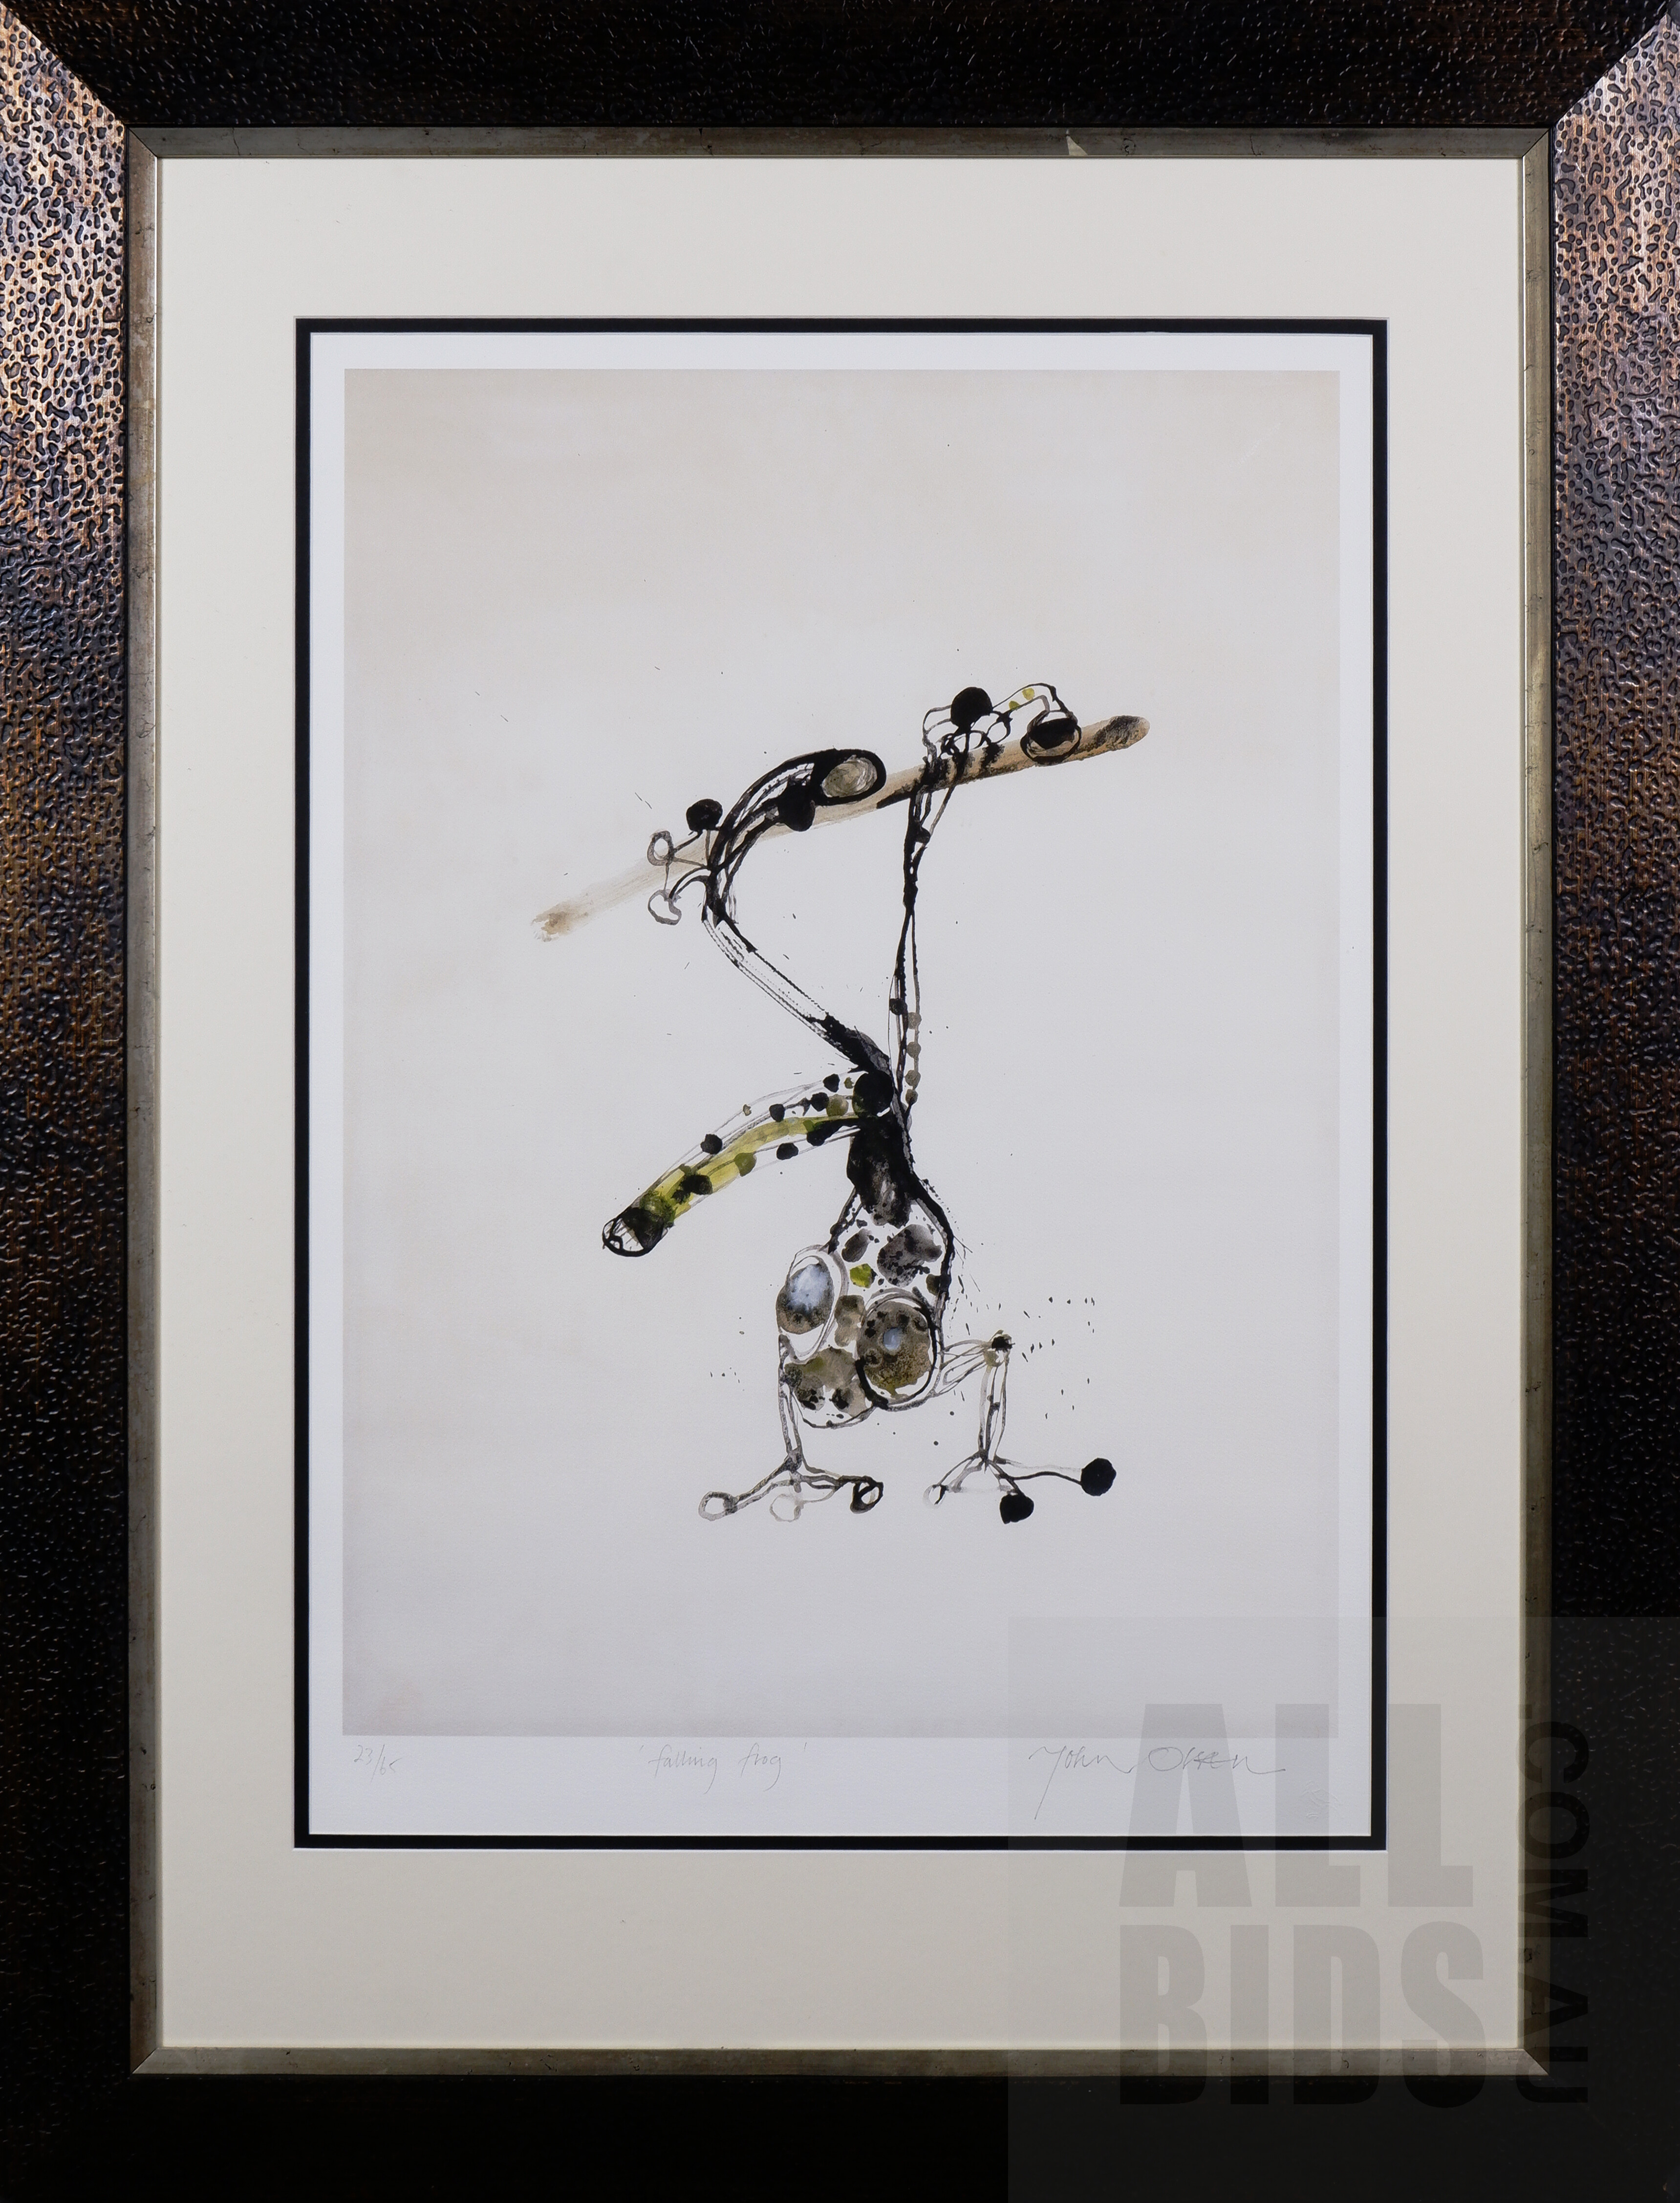 'John Olsen (born 1928), Falling Frog, Digital Lithograph, 79.5 x 57.5 cm (image size)'